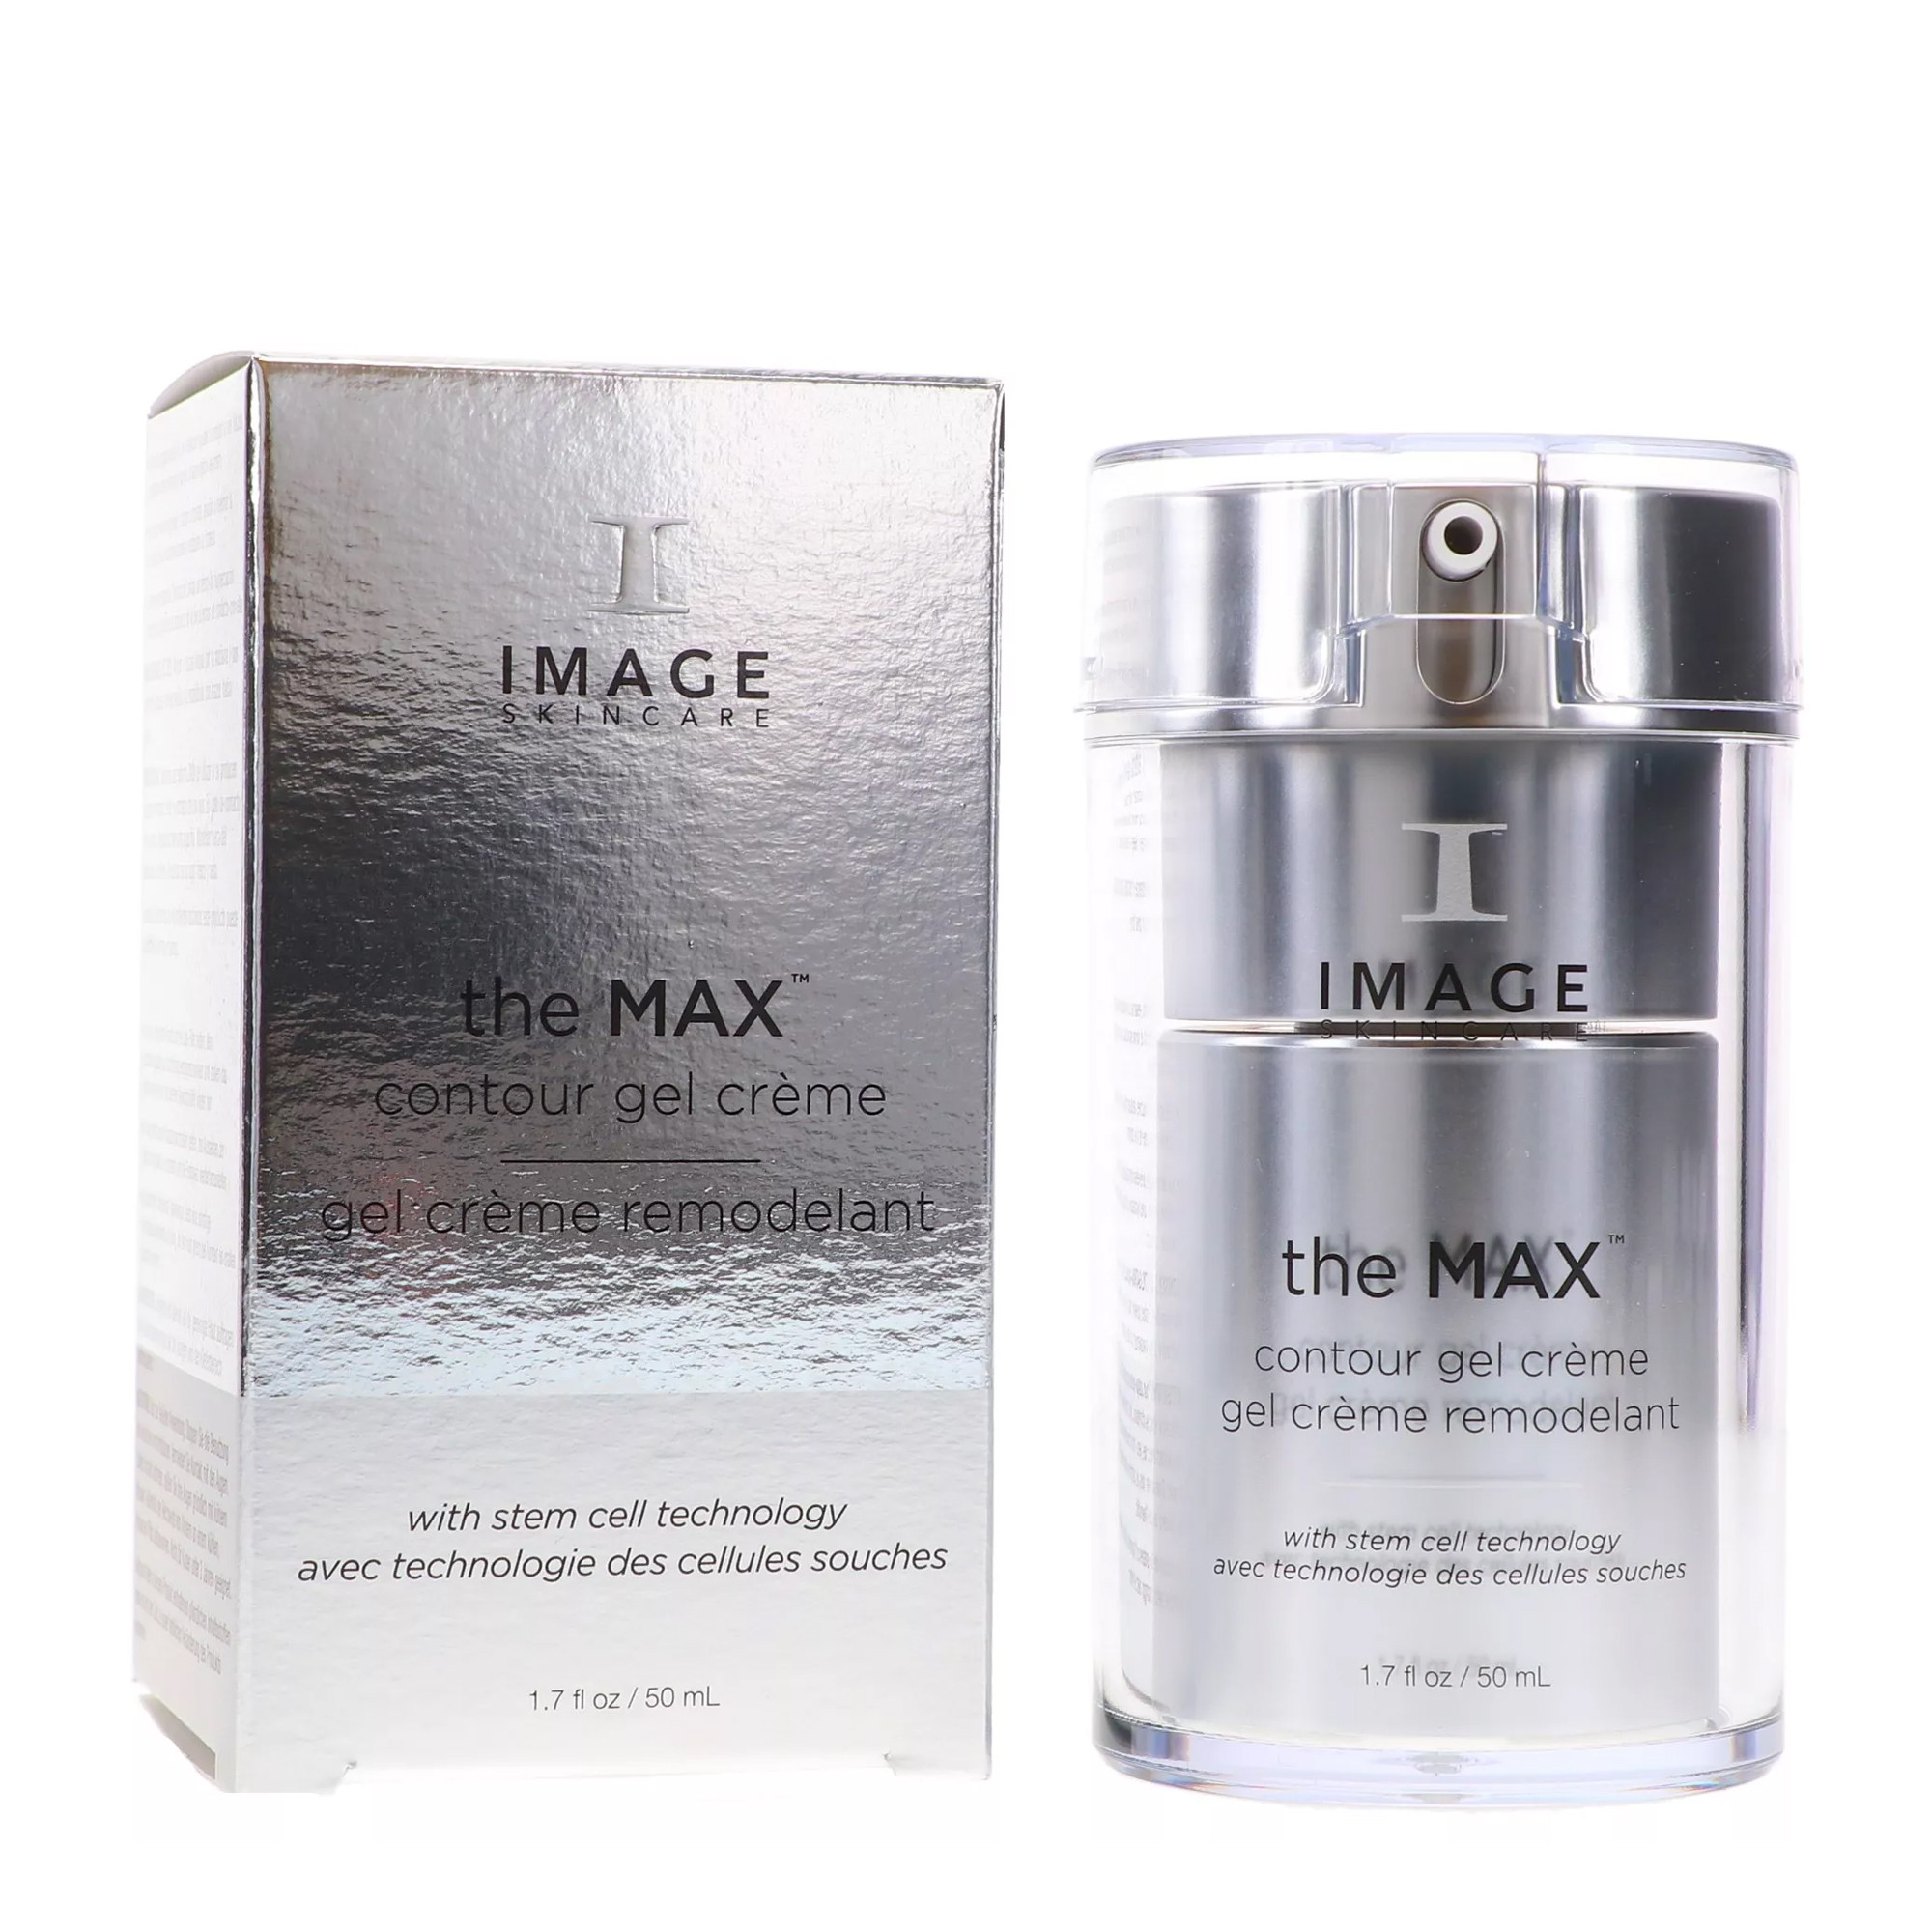 image the max contour gel cream цена